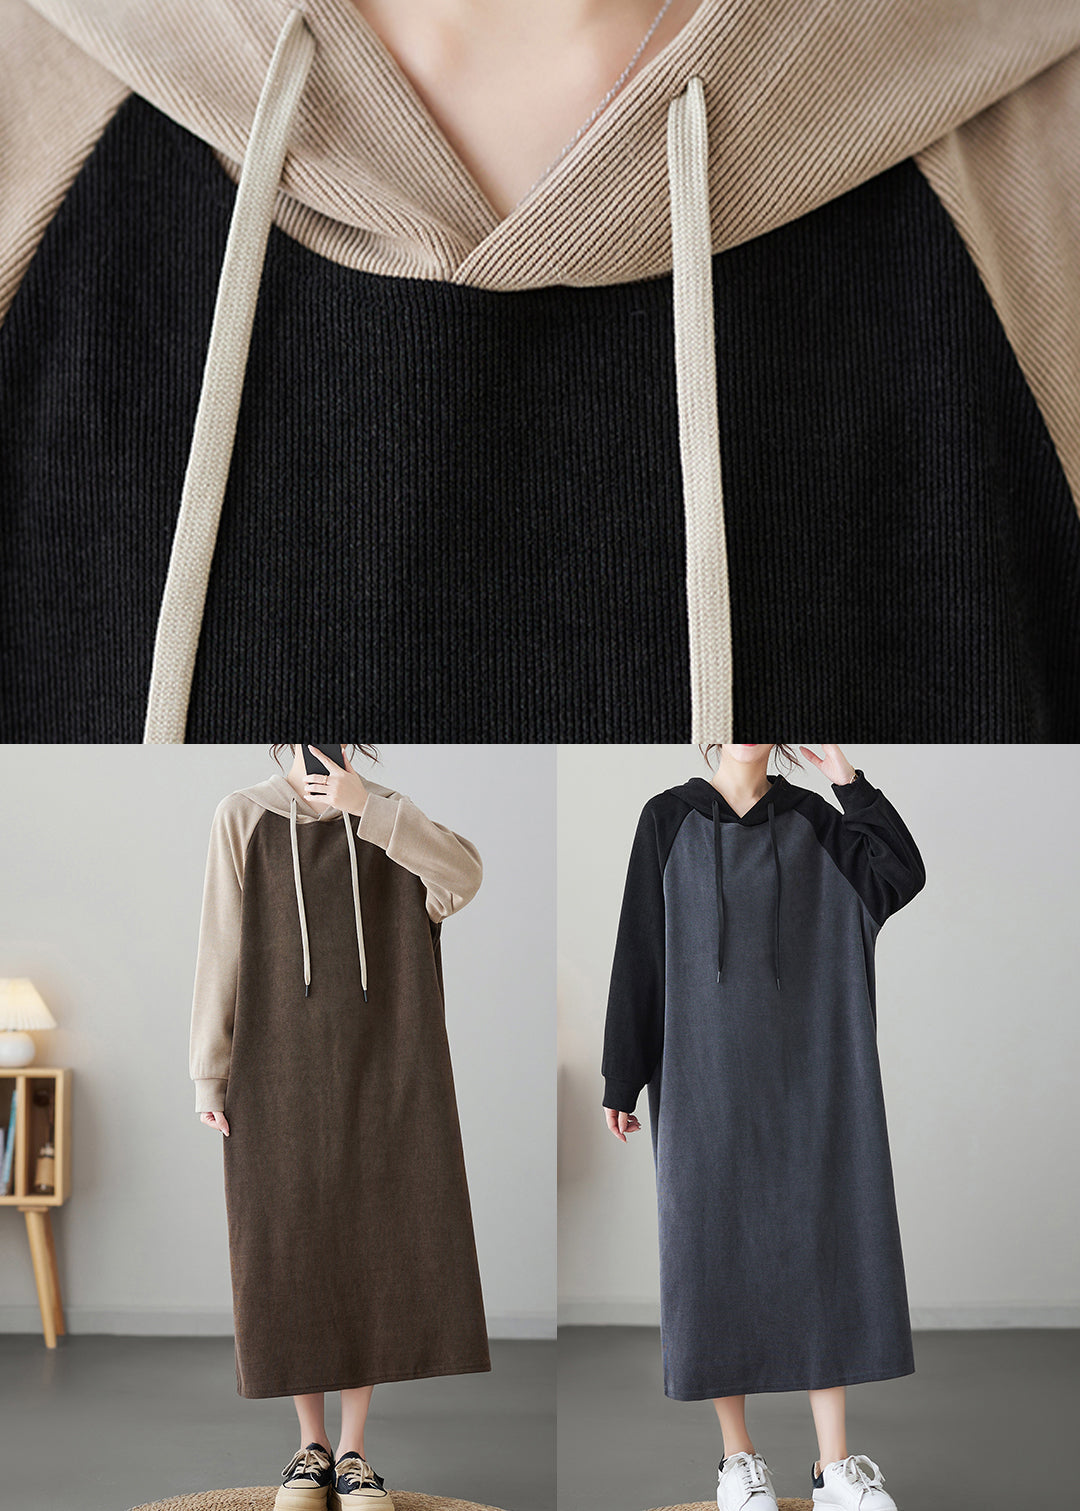 Plus Size Black Patchwork Cotton Hooded Sweatshirt Dresses Fall